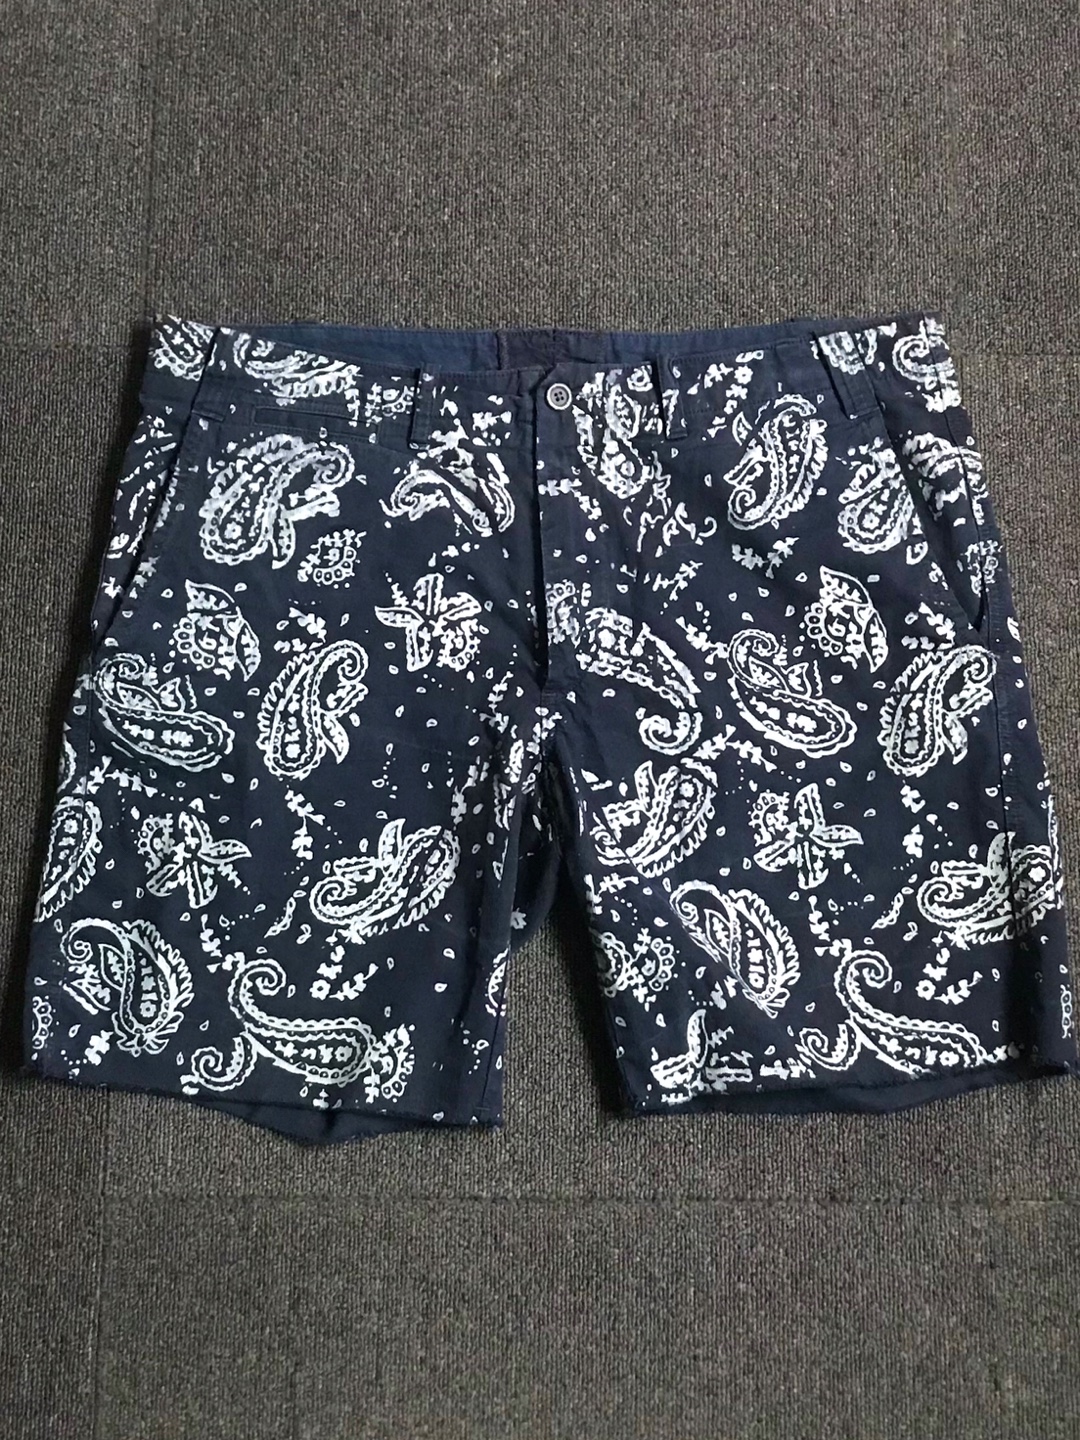 Polo RL cotton print cut off shorts (36 size,